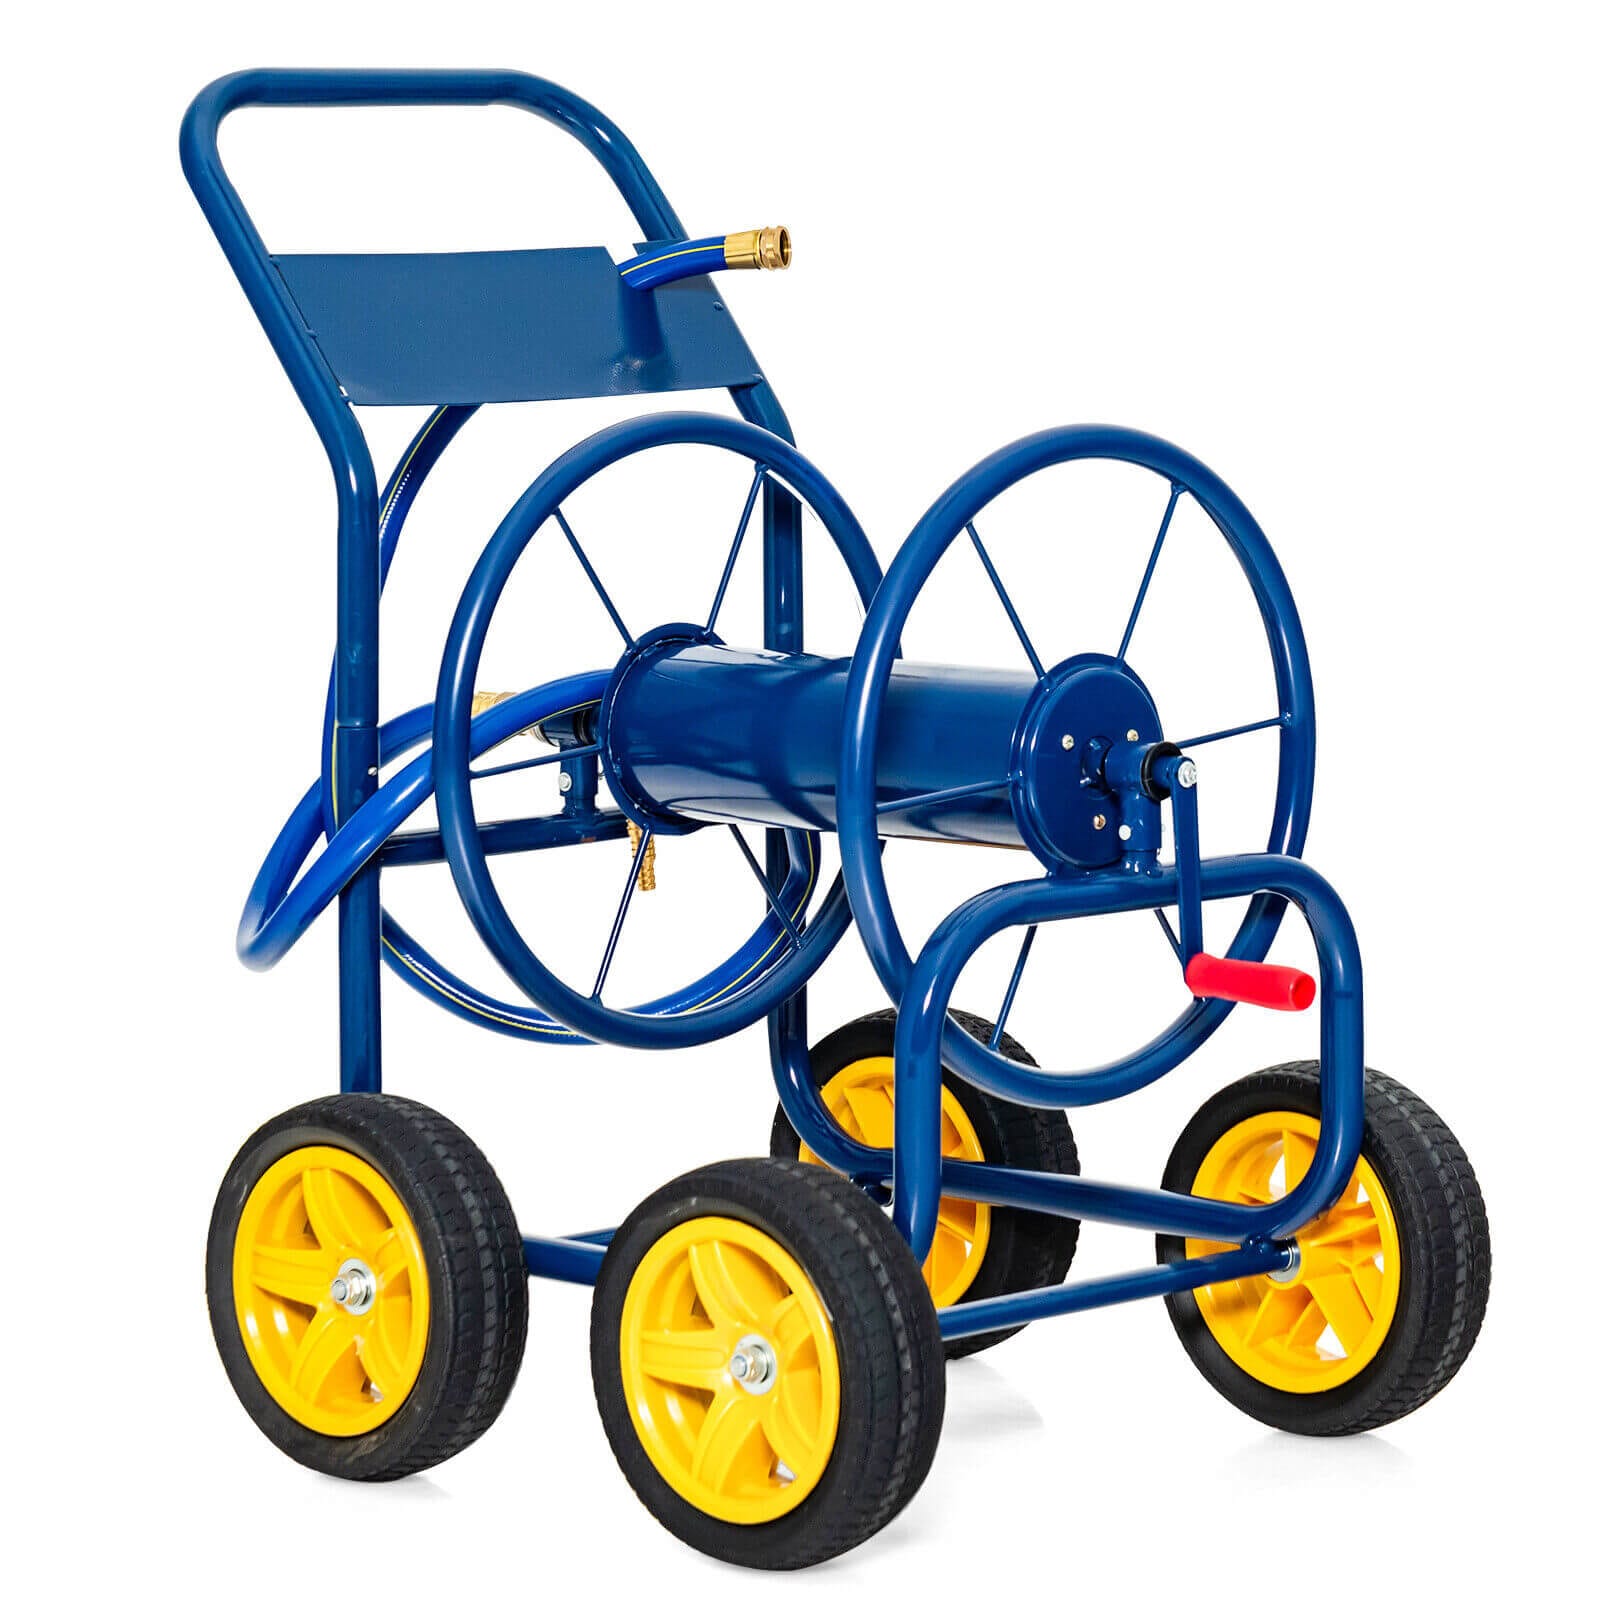 WELLFOR Blue Plastic Garden Hose Reel Cart with Hose Guide - 330ft